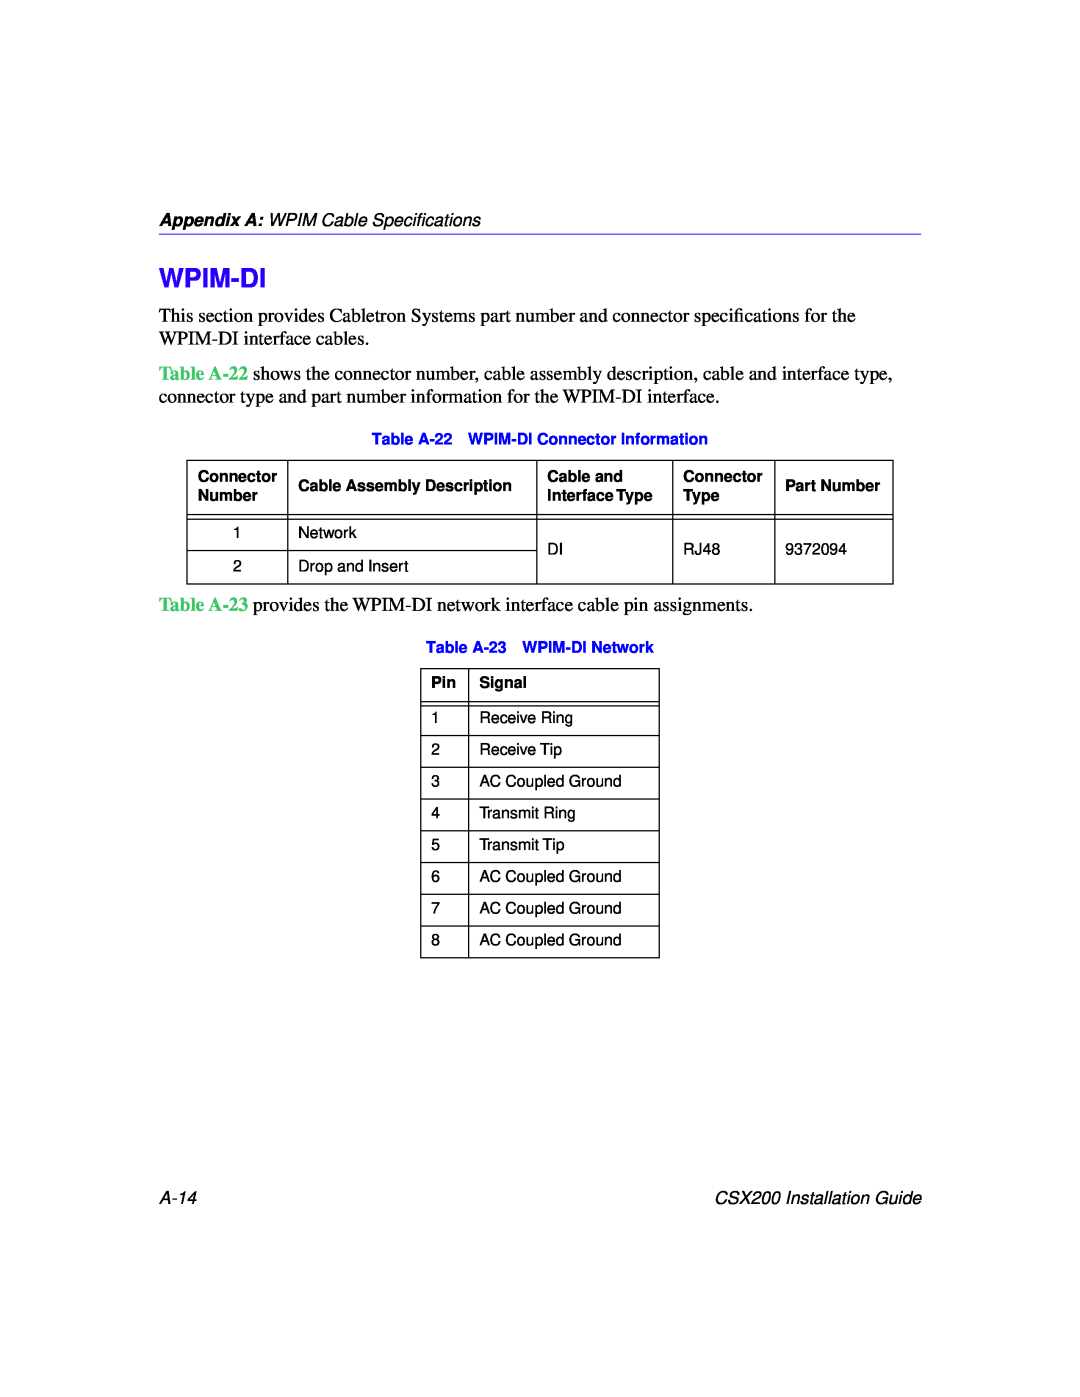 Cabletron Systems CSX200 manual Wpim-Di, Table A-22 WPIM-DI Connector Information, Table A-23 WPIM-DI Network 